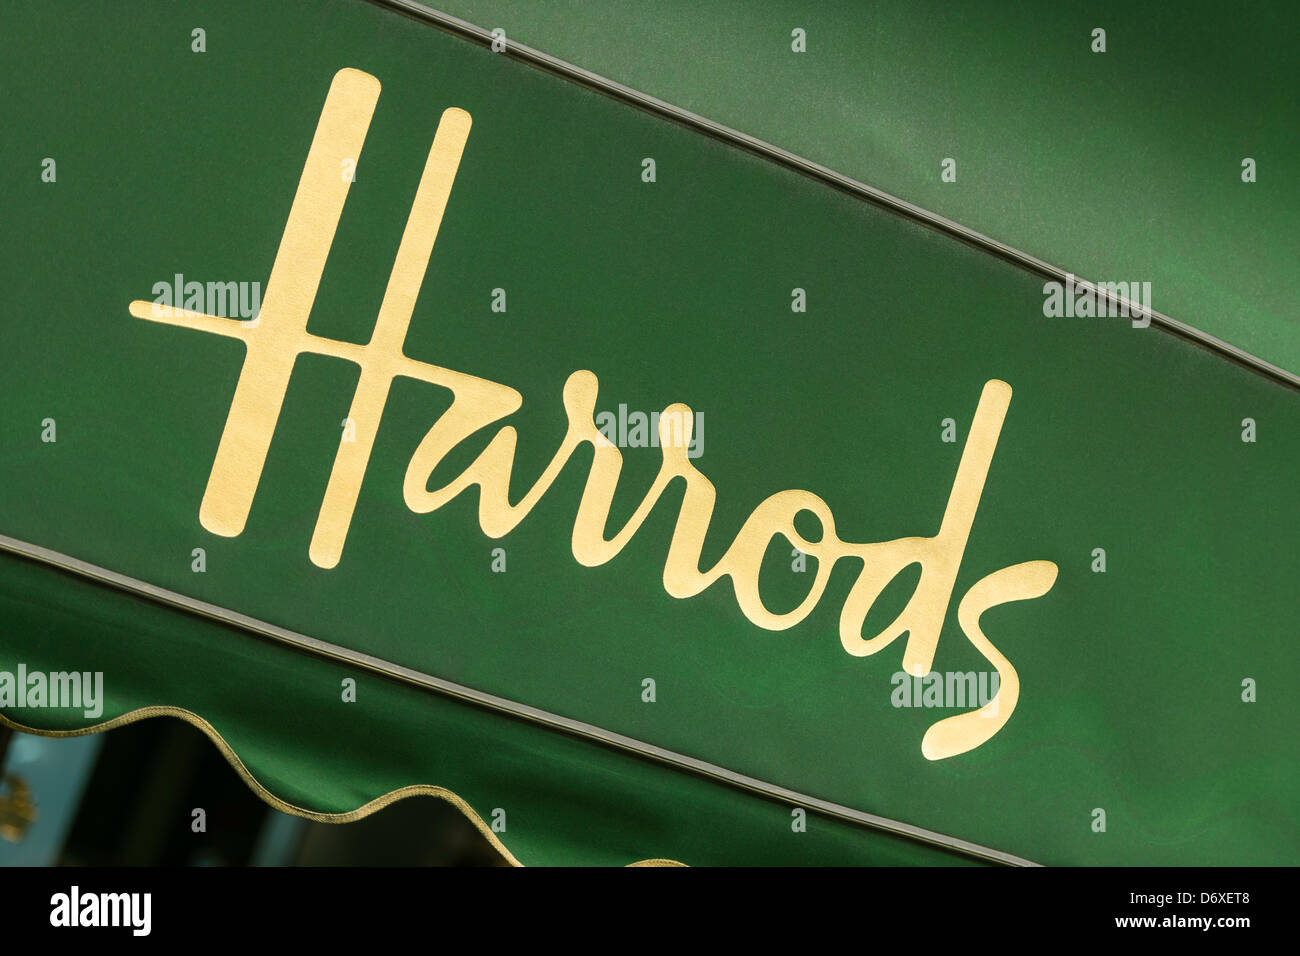 Harrods Shop Front Stock Photo